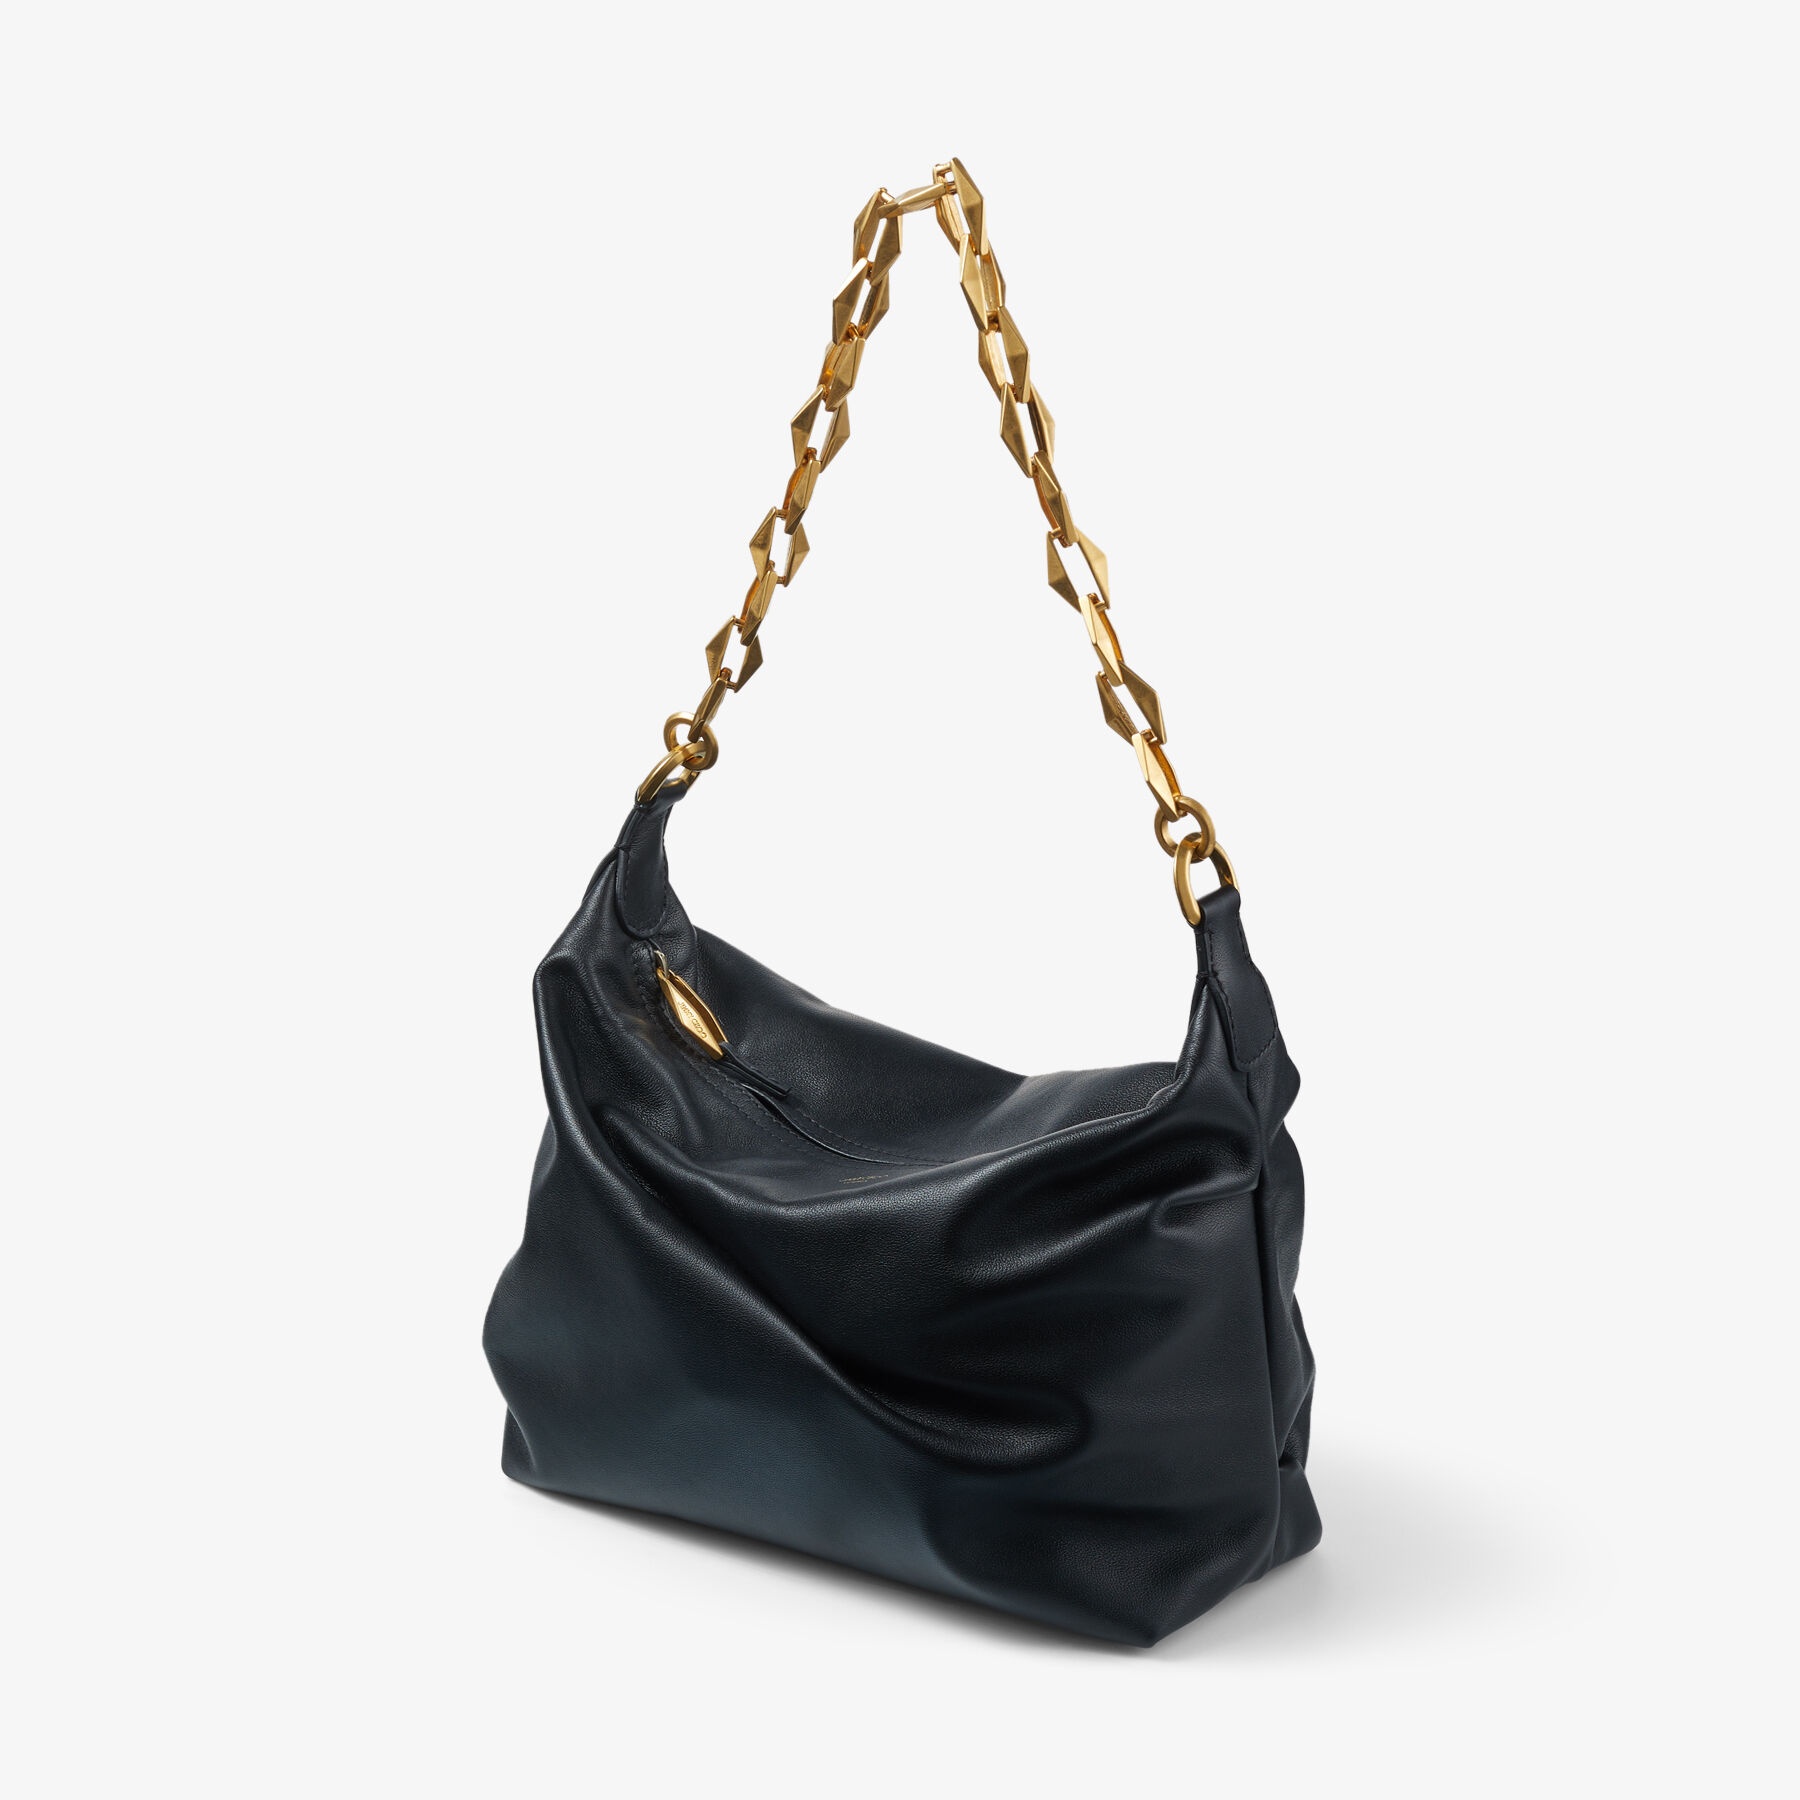 Diamond Soft Hobo S
Black Soft Calf Leather Hobo Bag with Chain Strap - 4